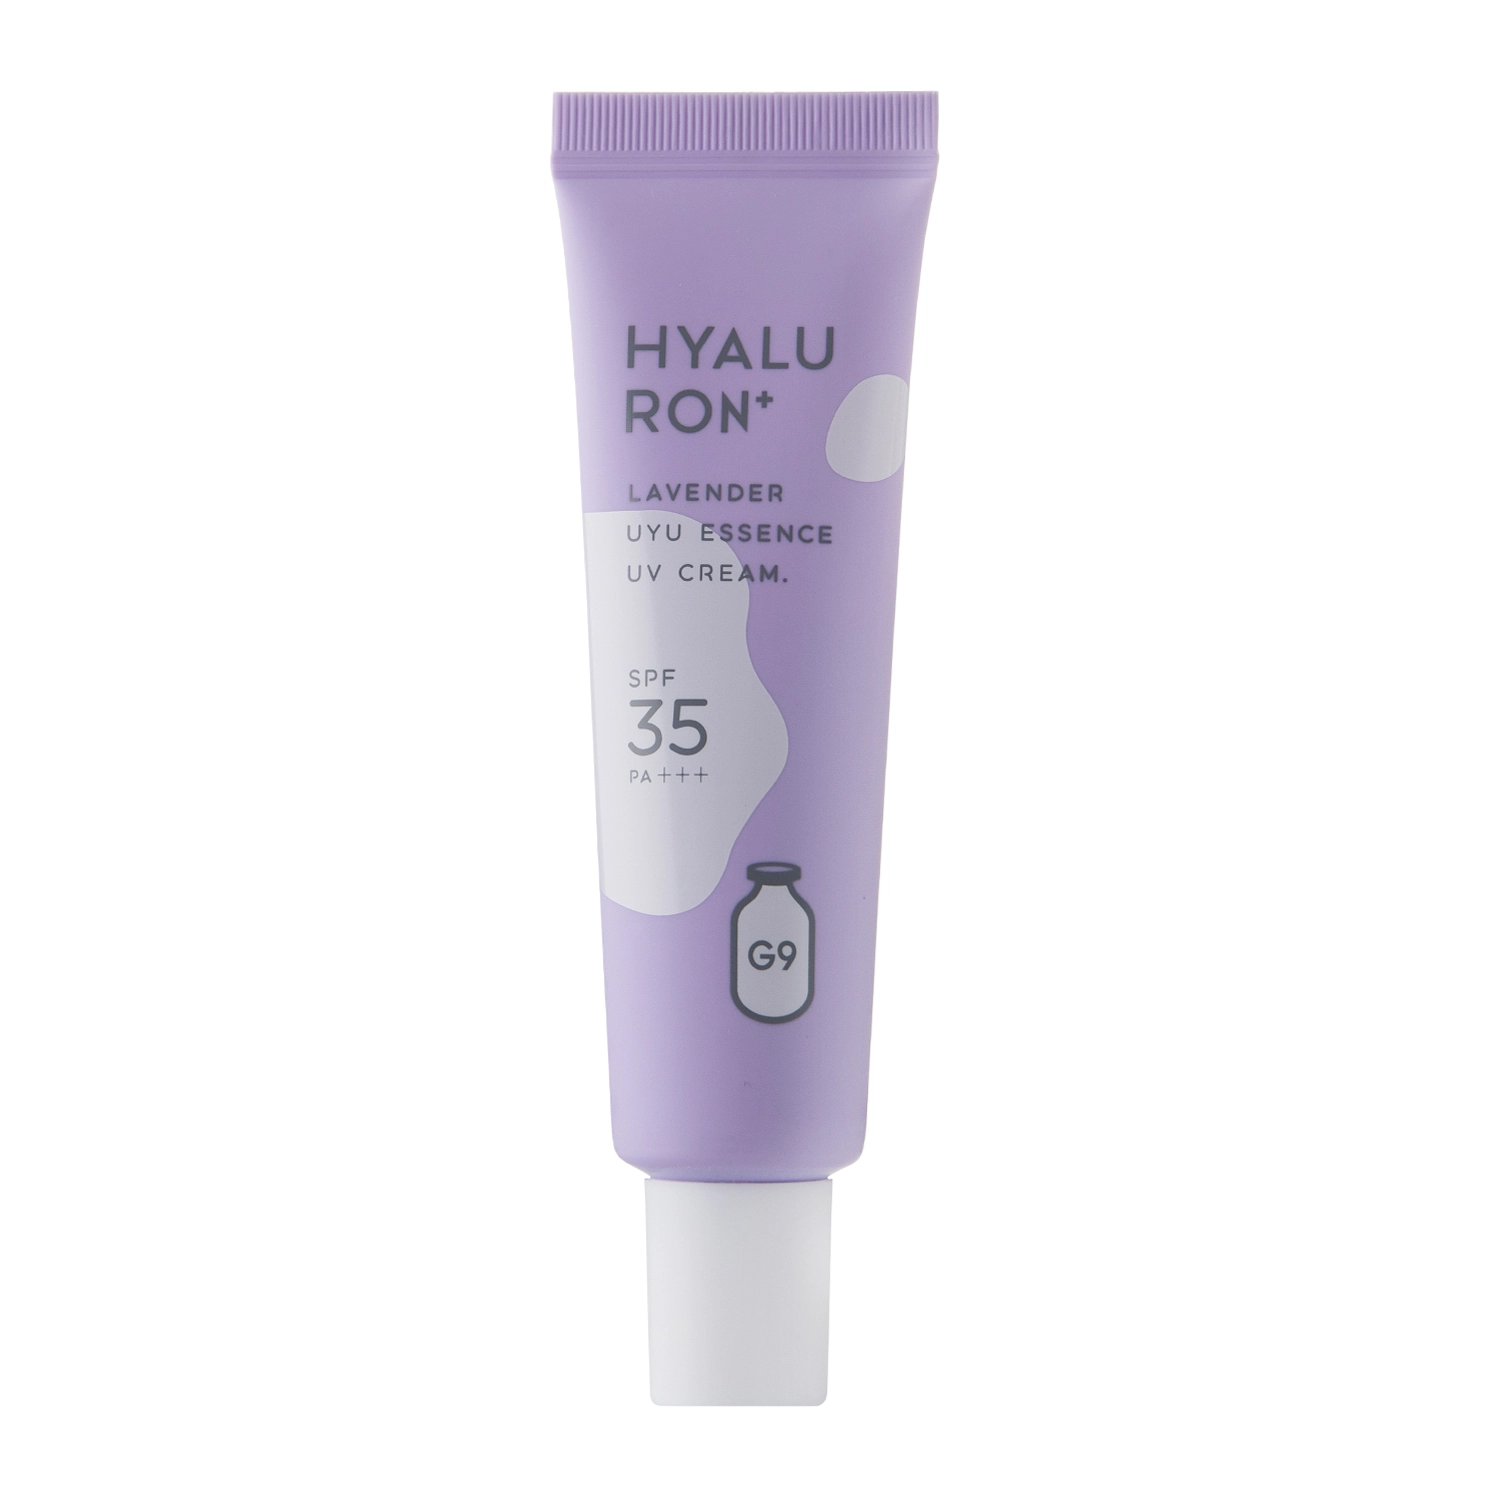 G9Skin - UYU Essence UV Cream Hyaluron Lavender SPF35/PA++ - Увлажняющий тонирующий крем с фильтрами - 40g